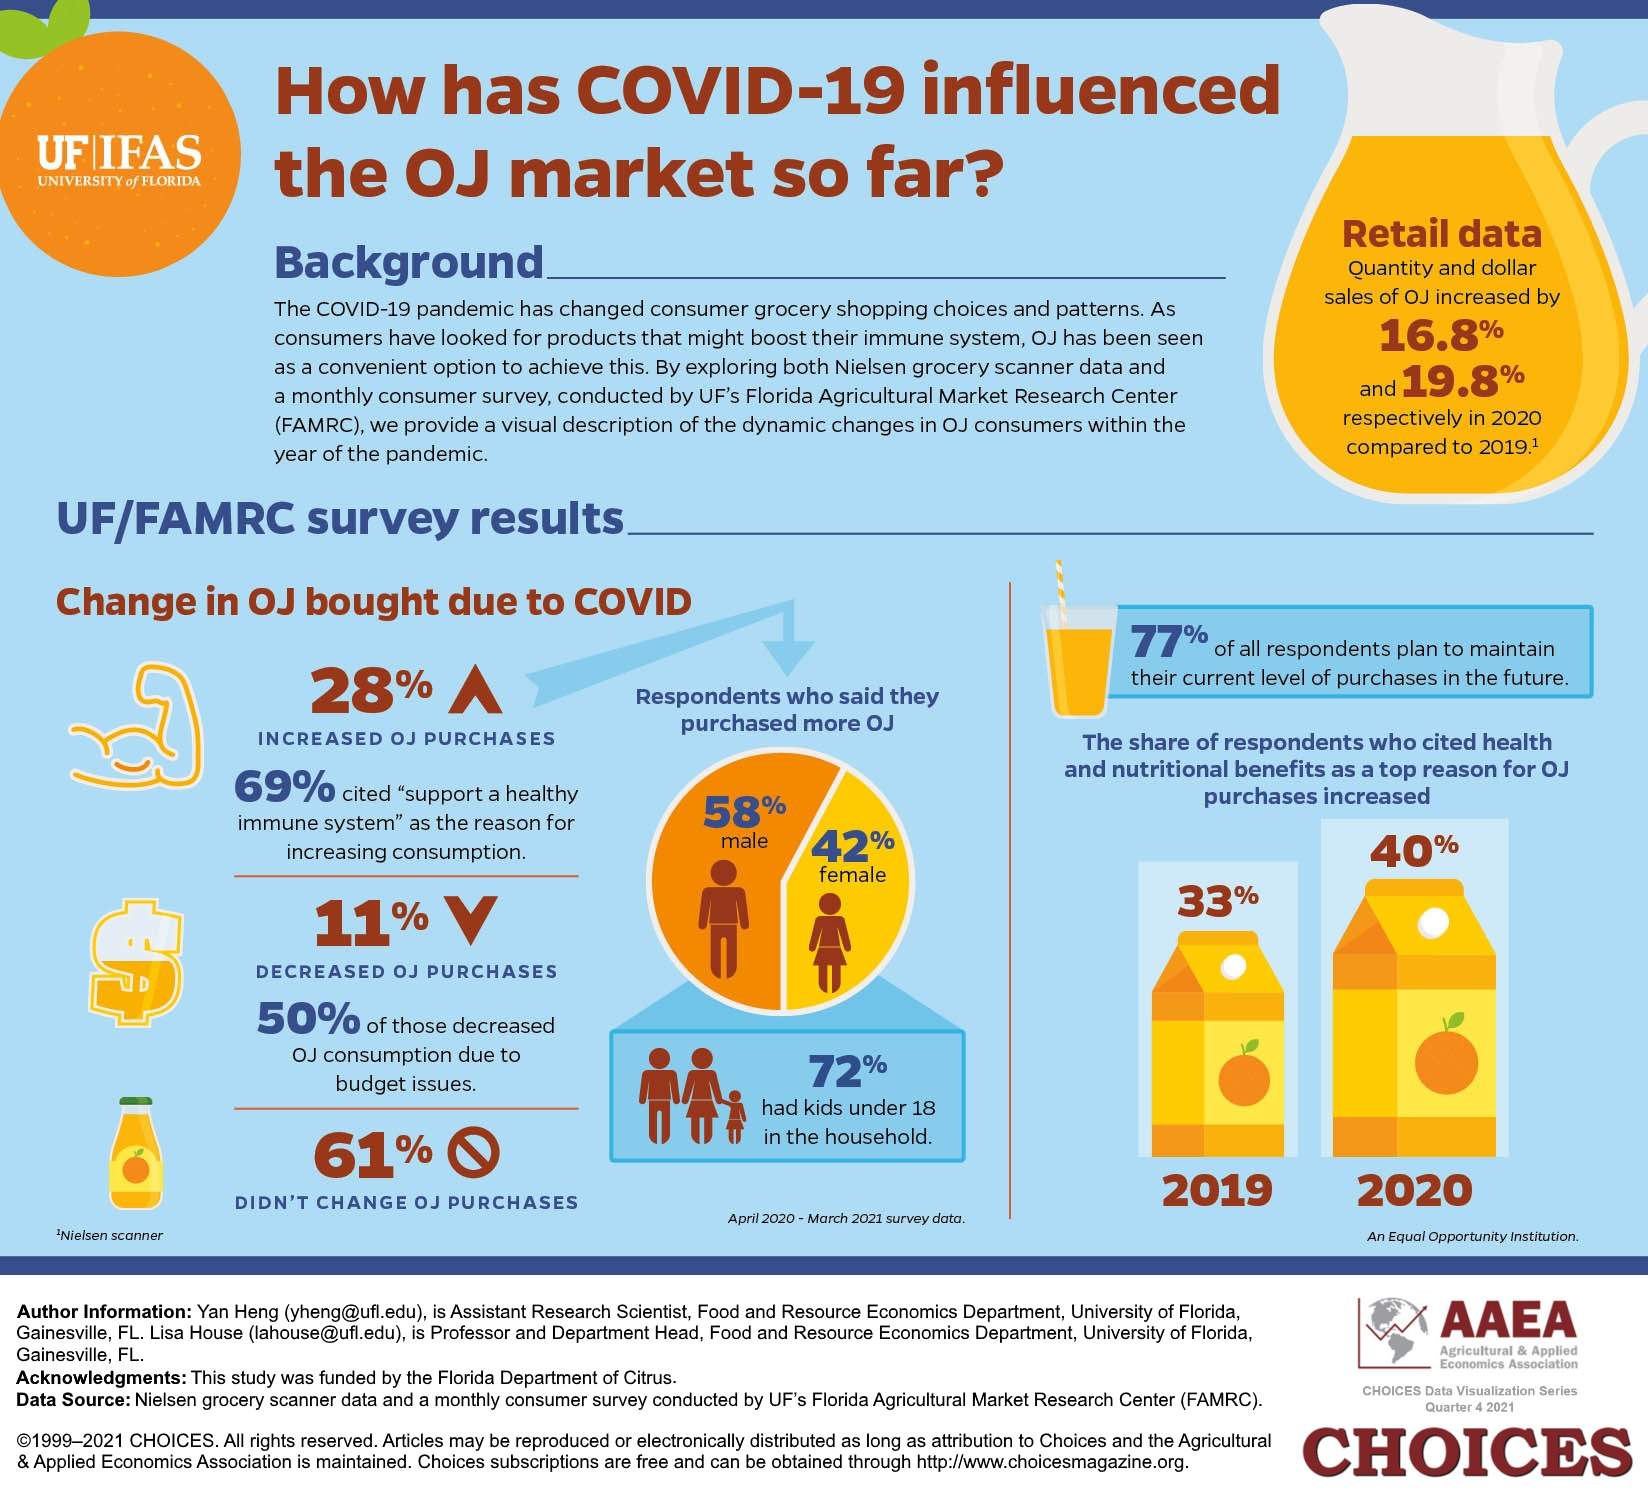 How has Covid-19 influenced the OJ market so far?